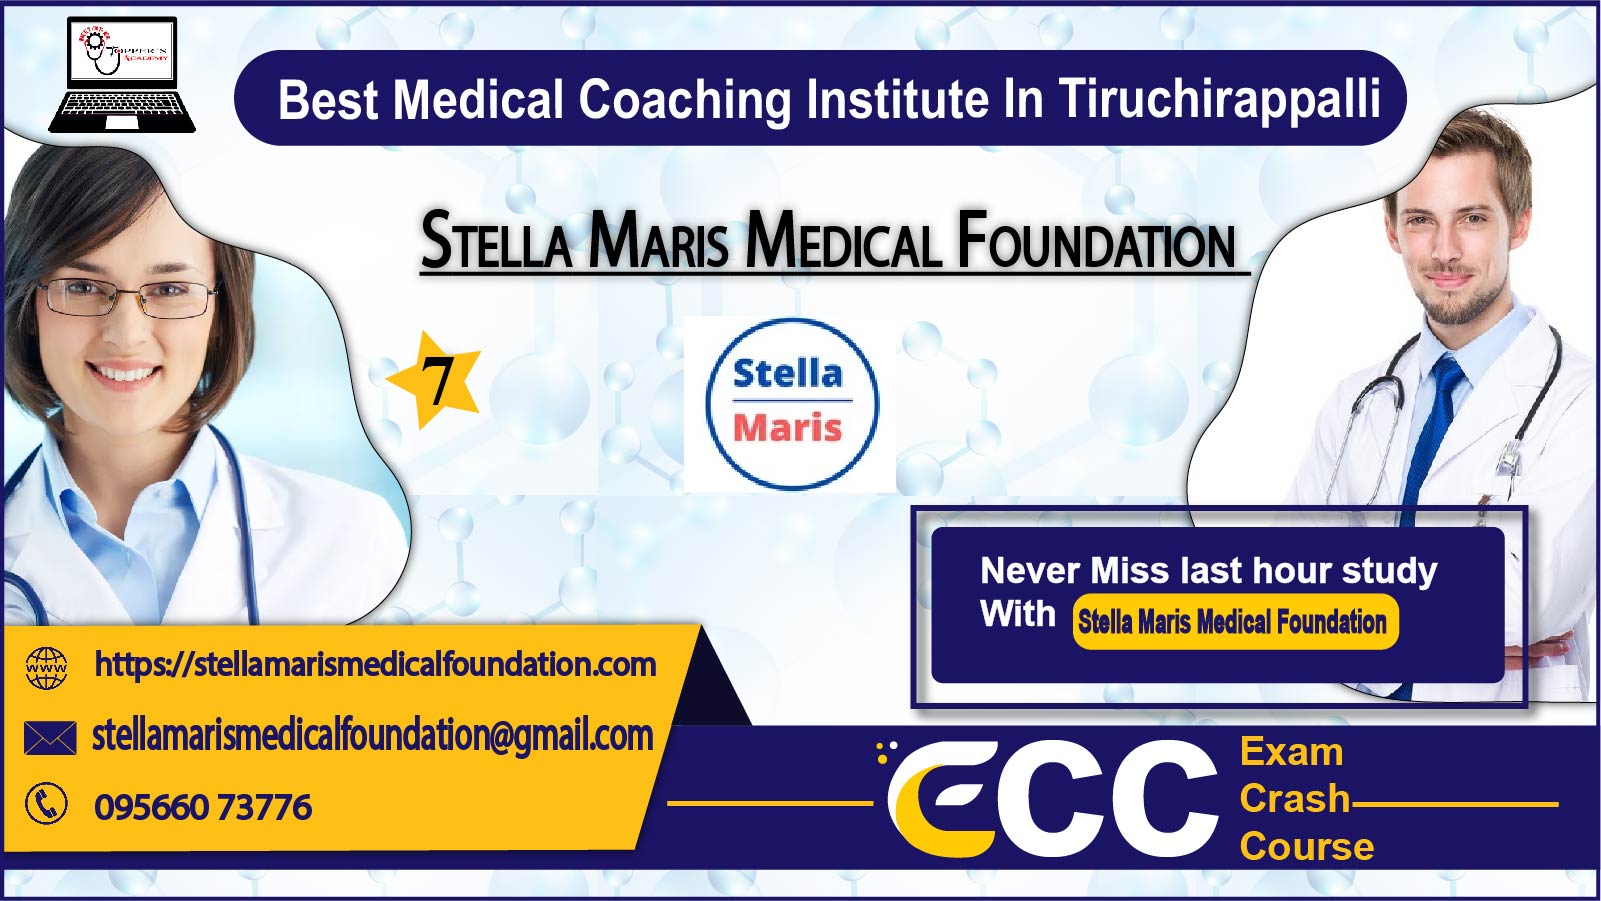 Stella Maris Medical Foundation in Tiruchirappalli